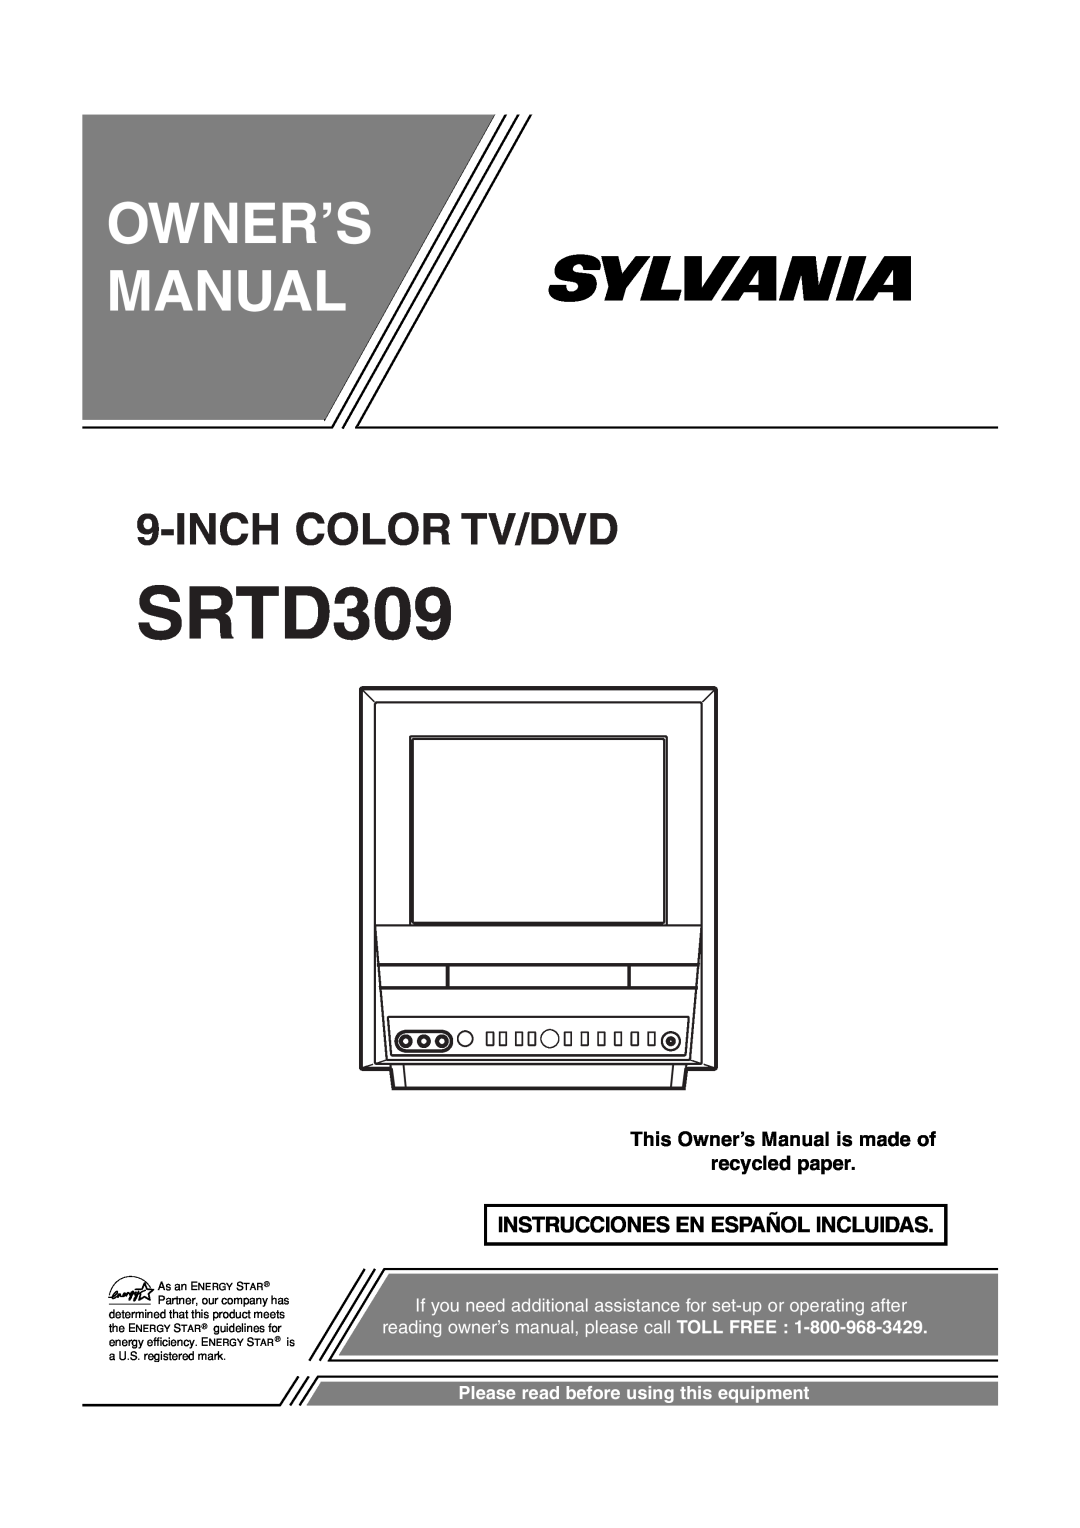 Sylvania SRTD309 owner manual Instrucciones En Español Incluidas, This Owner’s Manual is made of recycled paper 